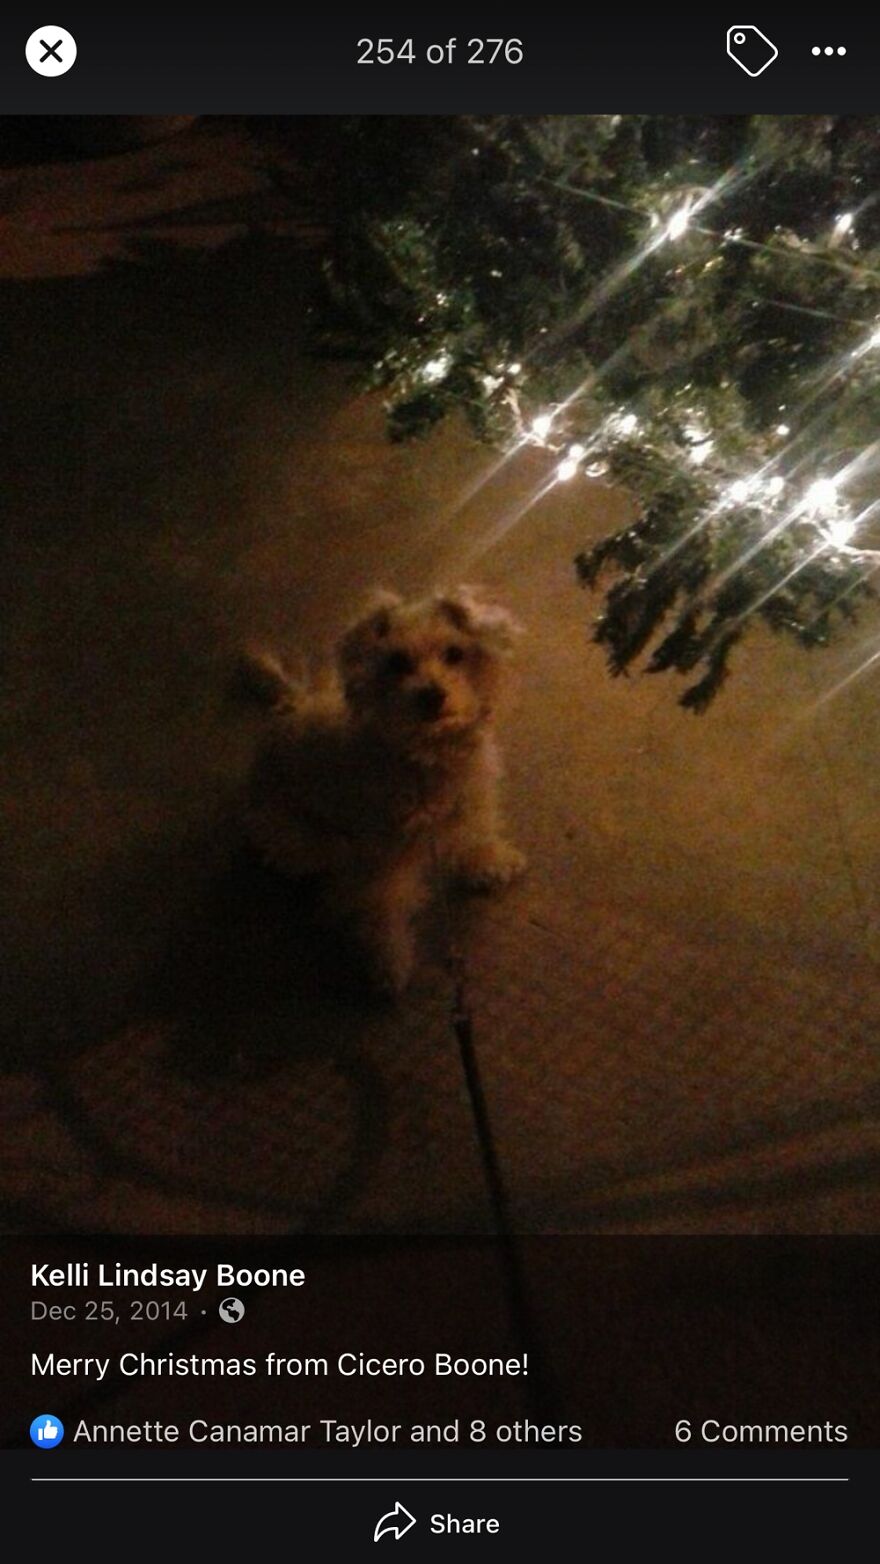 The Best Present Under The Tree, Little Cicero